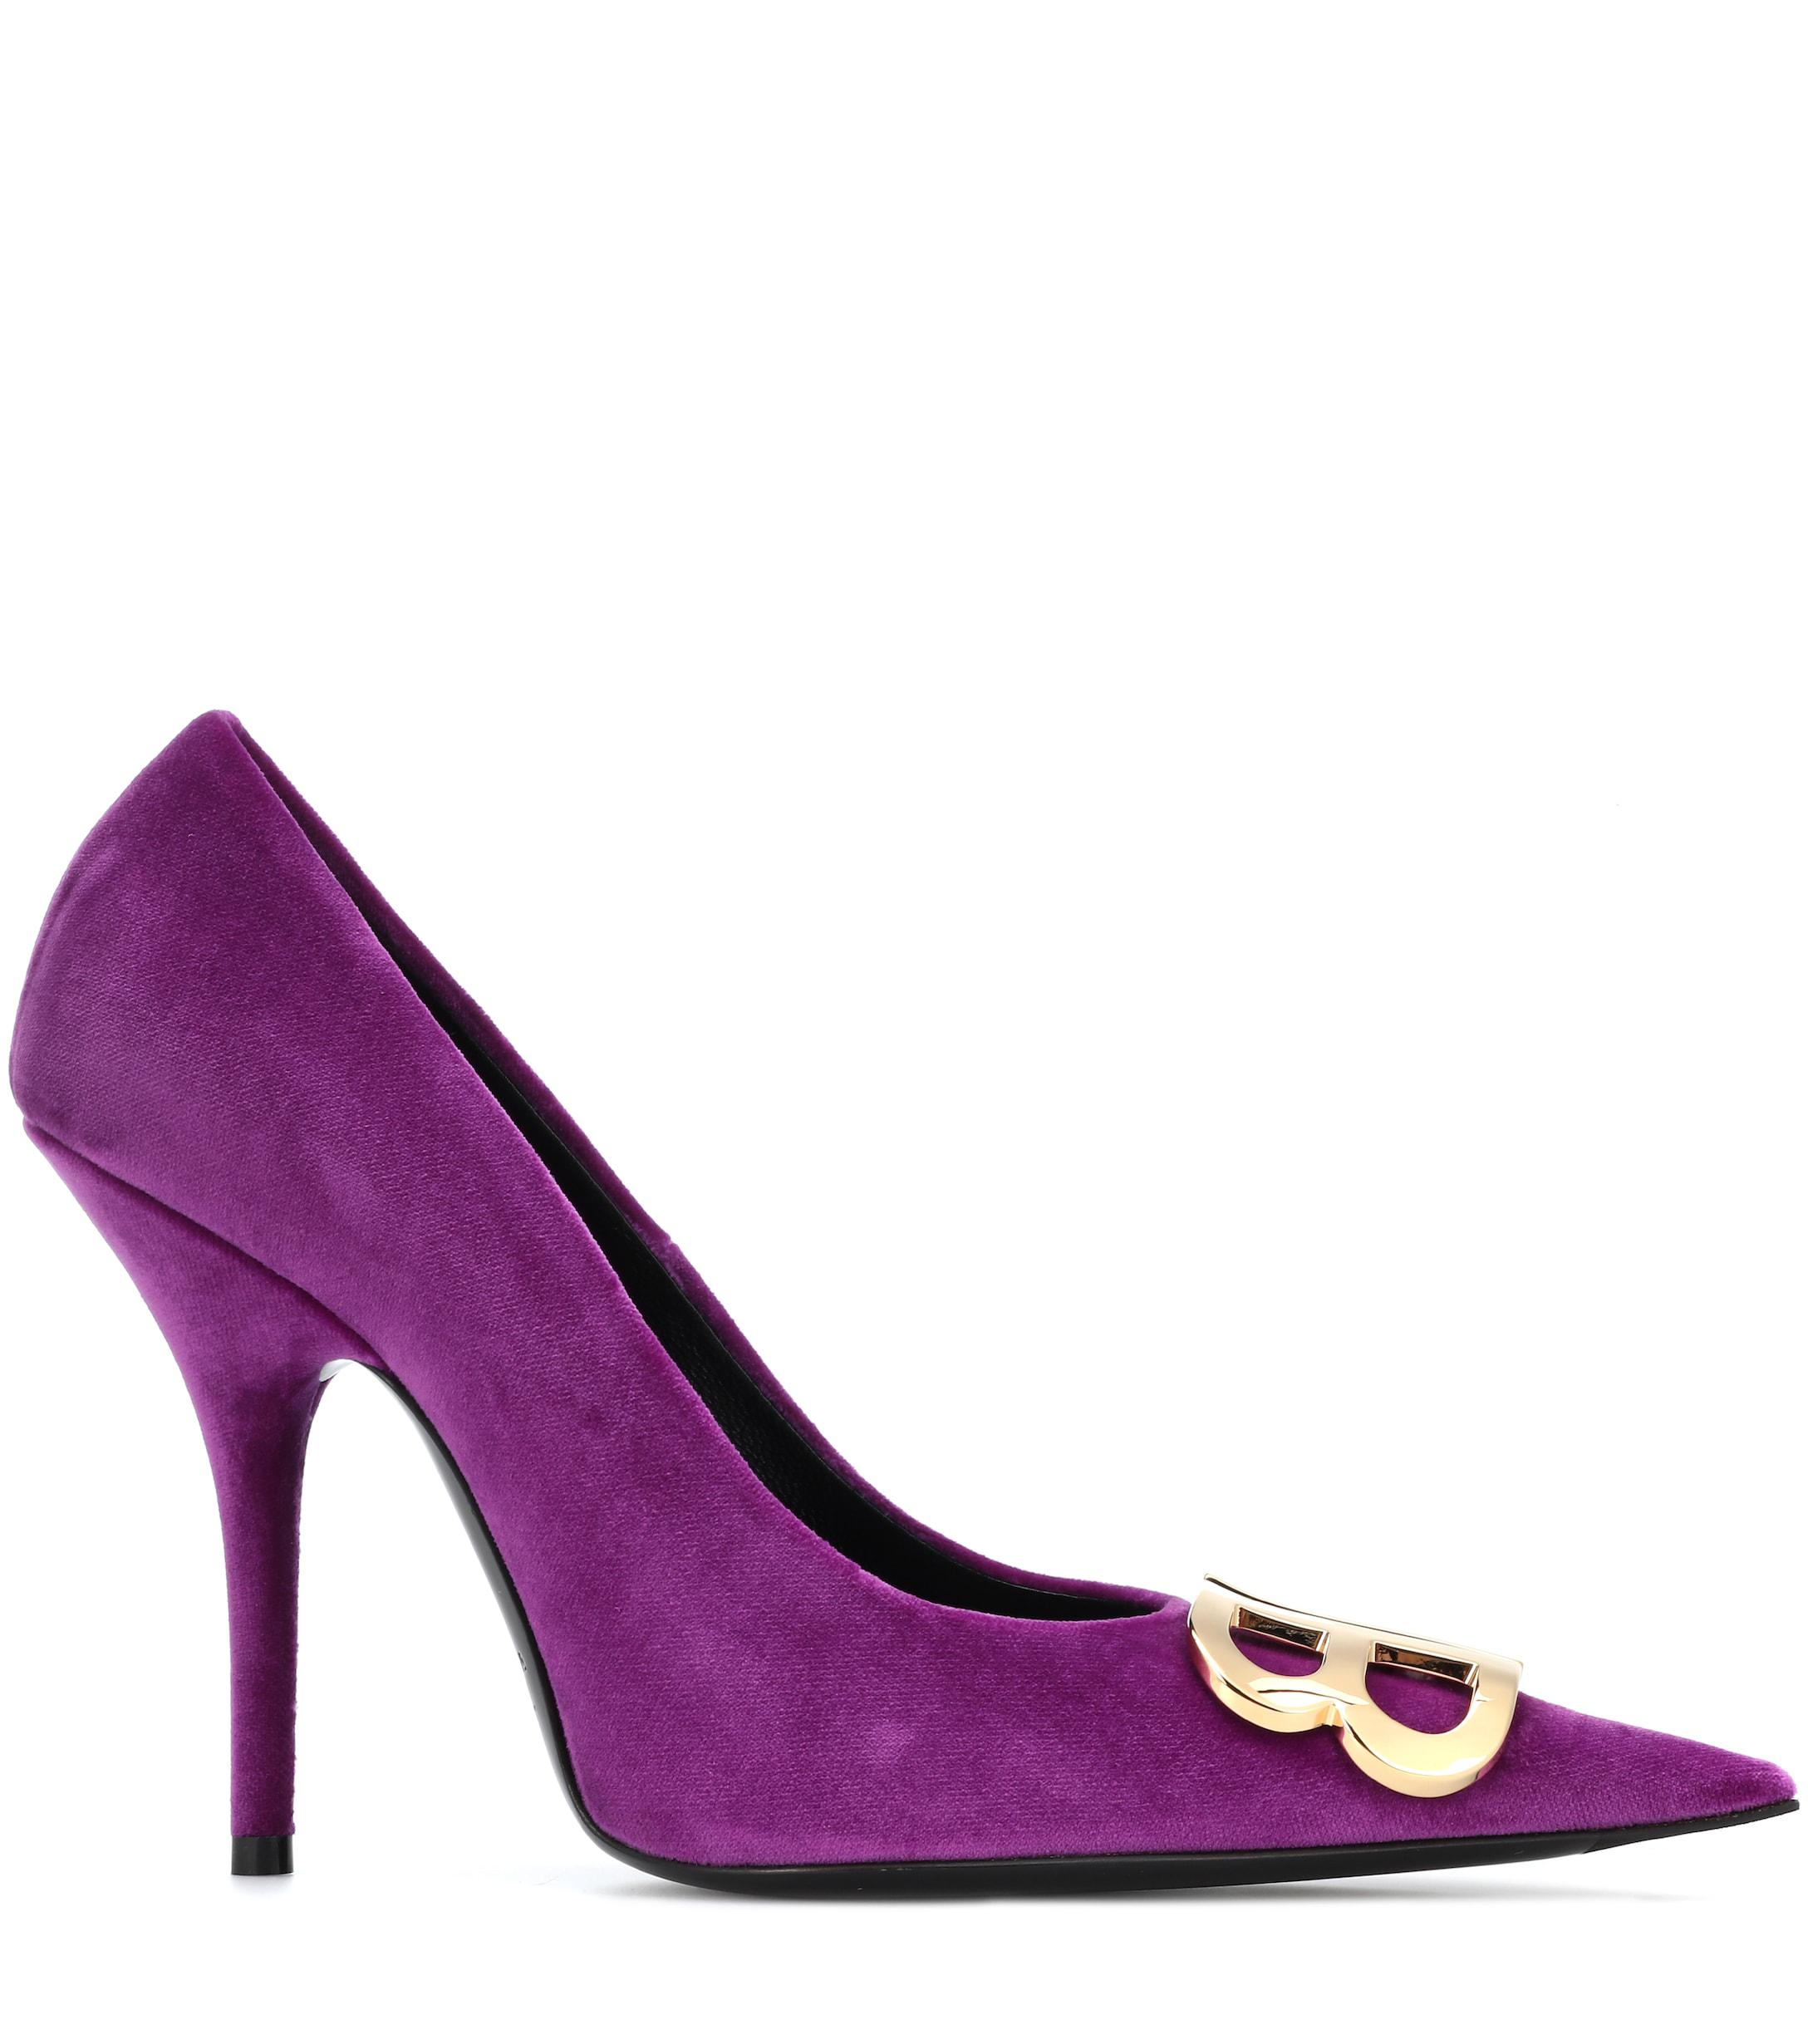 Balenciaga Bb Velvet Pumps in Purple - Lyst